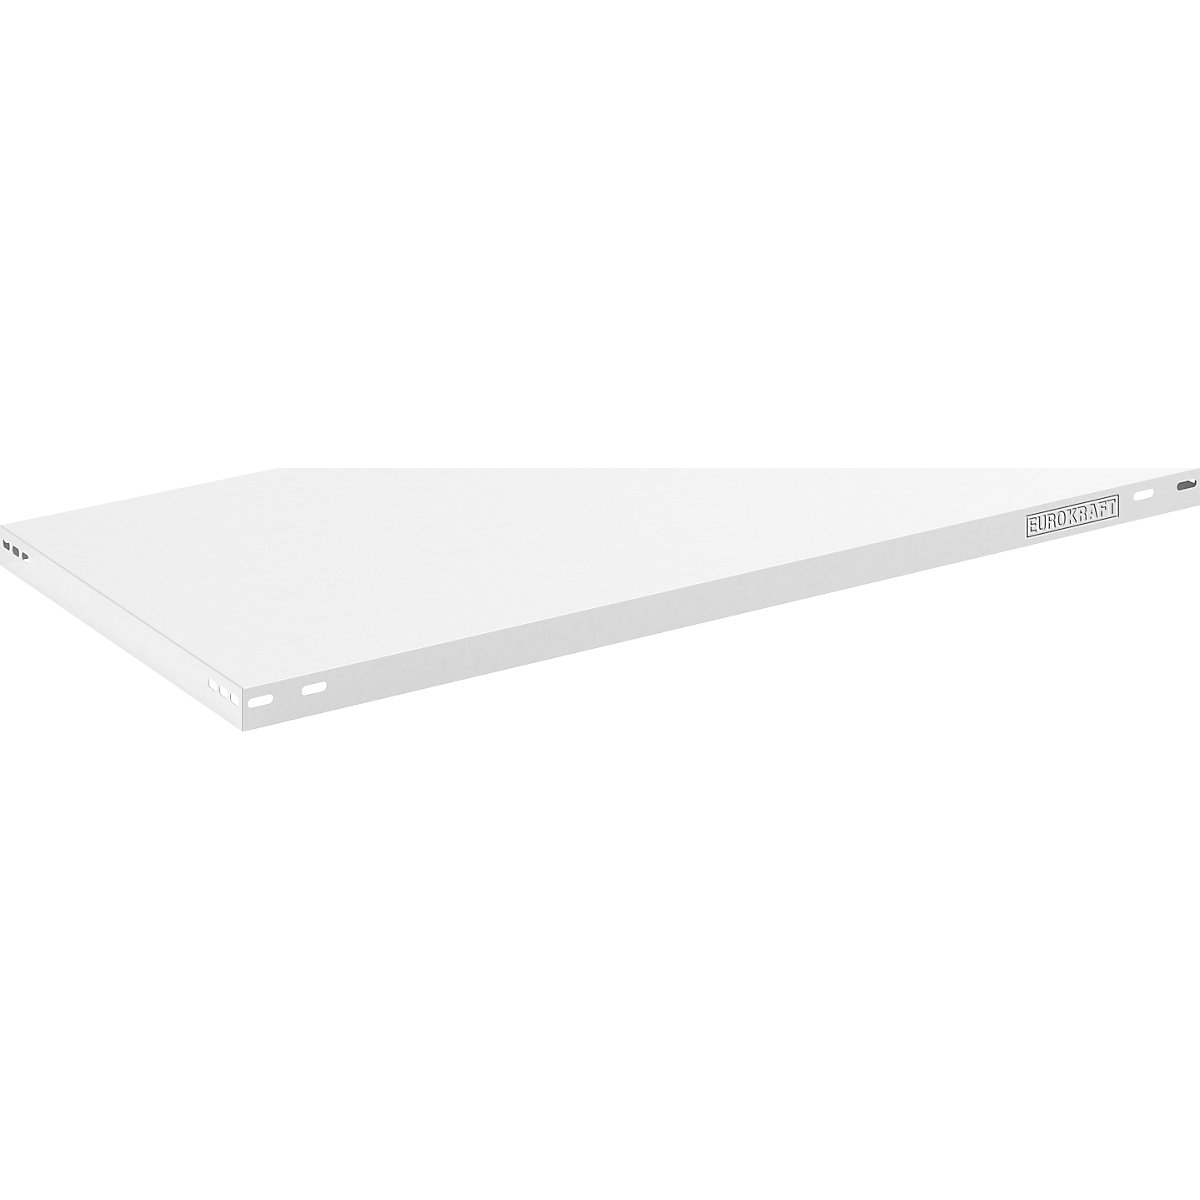 Shelf, max. load 350 kg – eurokraft pro, light grey, WxD 1000 x 600 mm